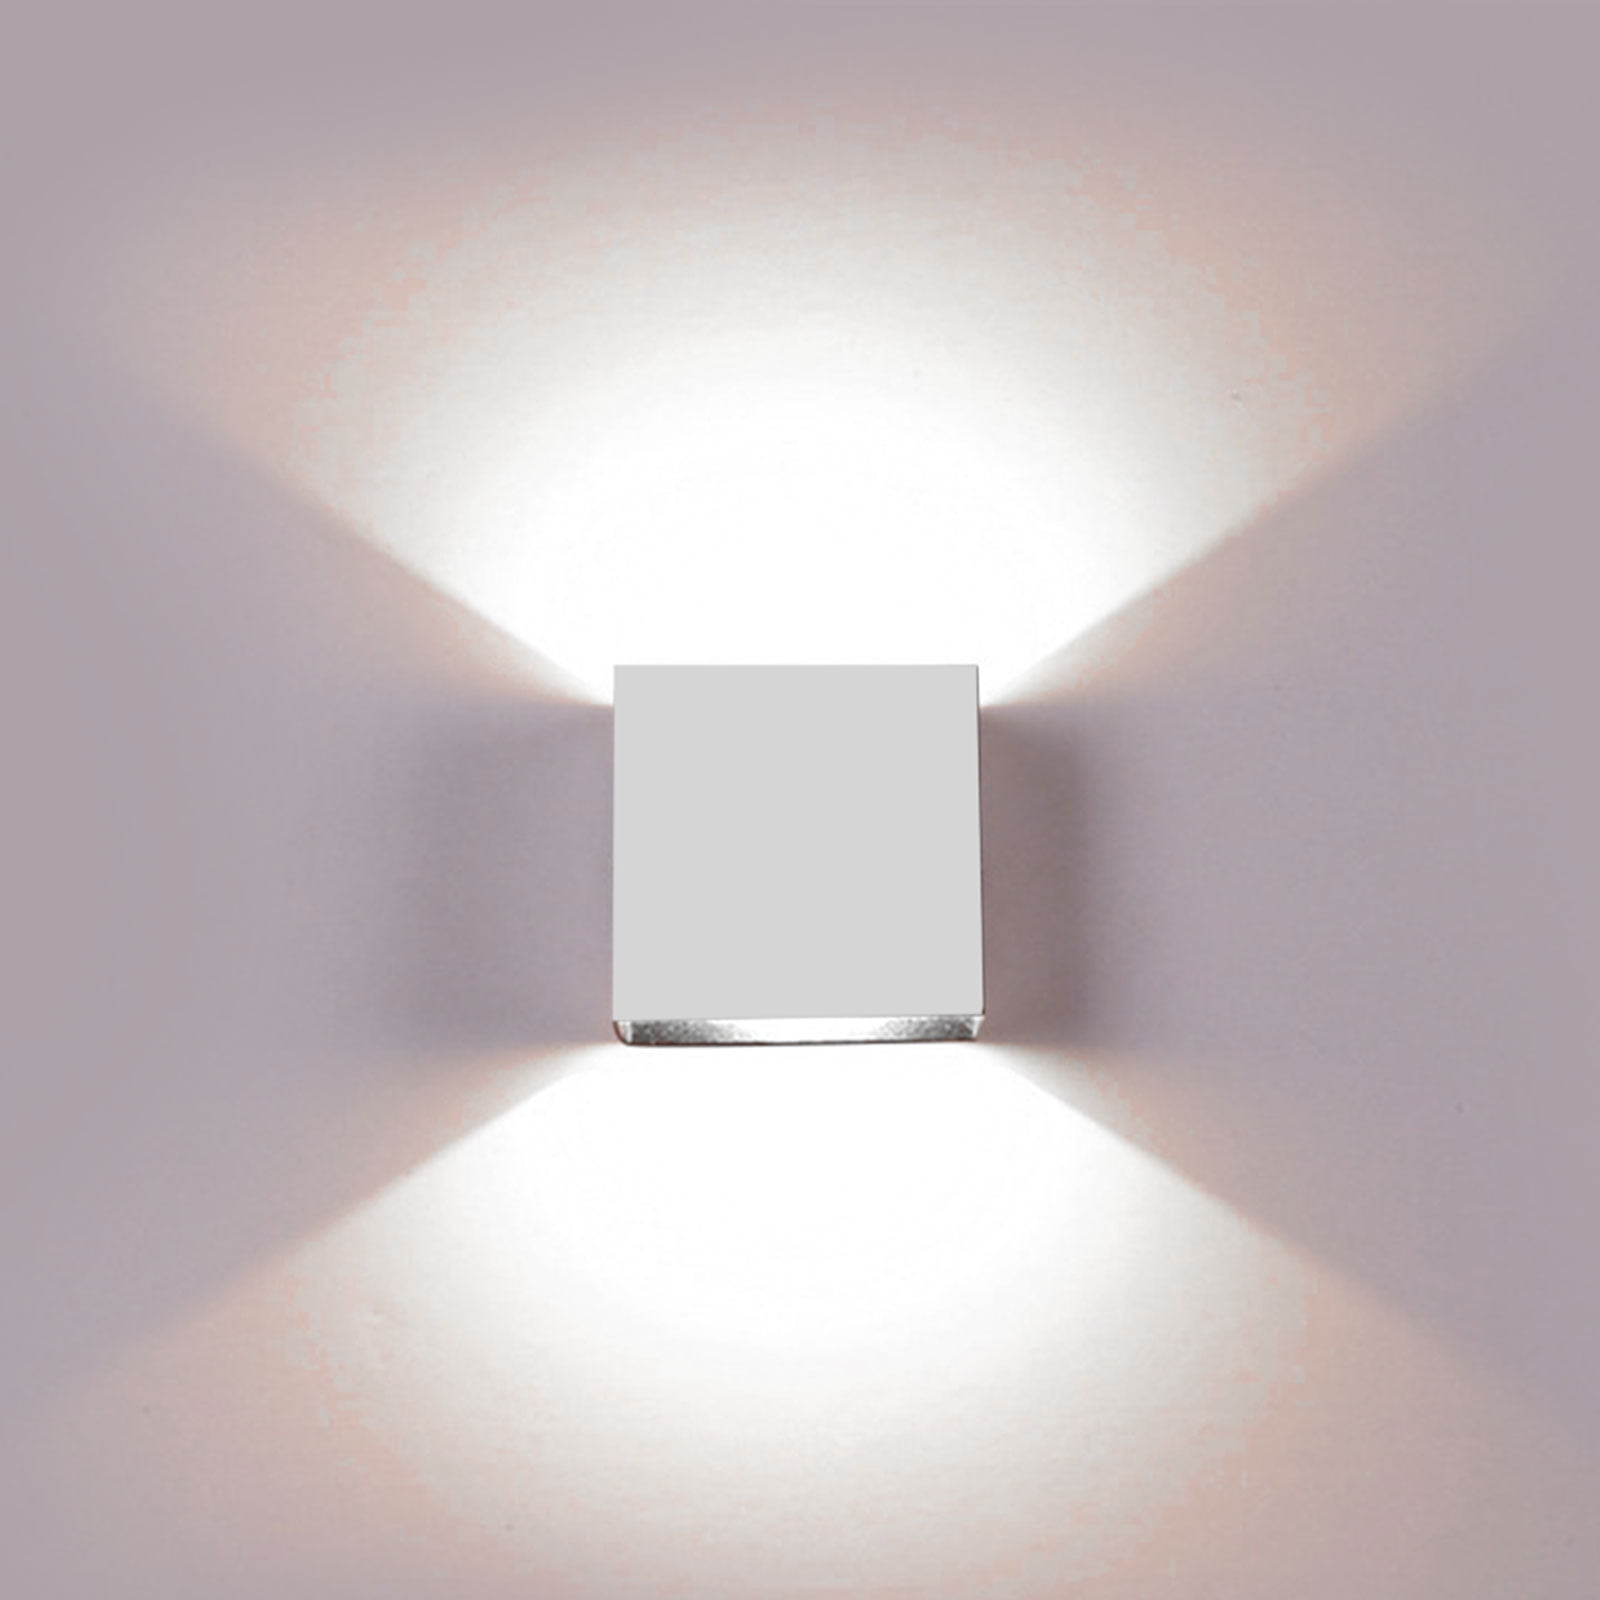 LED Wall Light Modern Up Down Lamp Sconce Spot Lighting Home Bedroom Fixture 